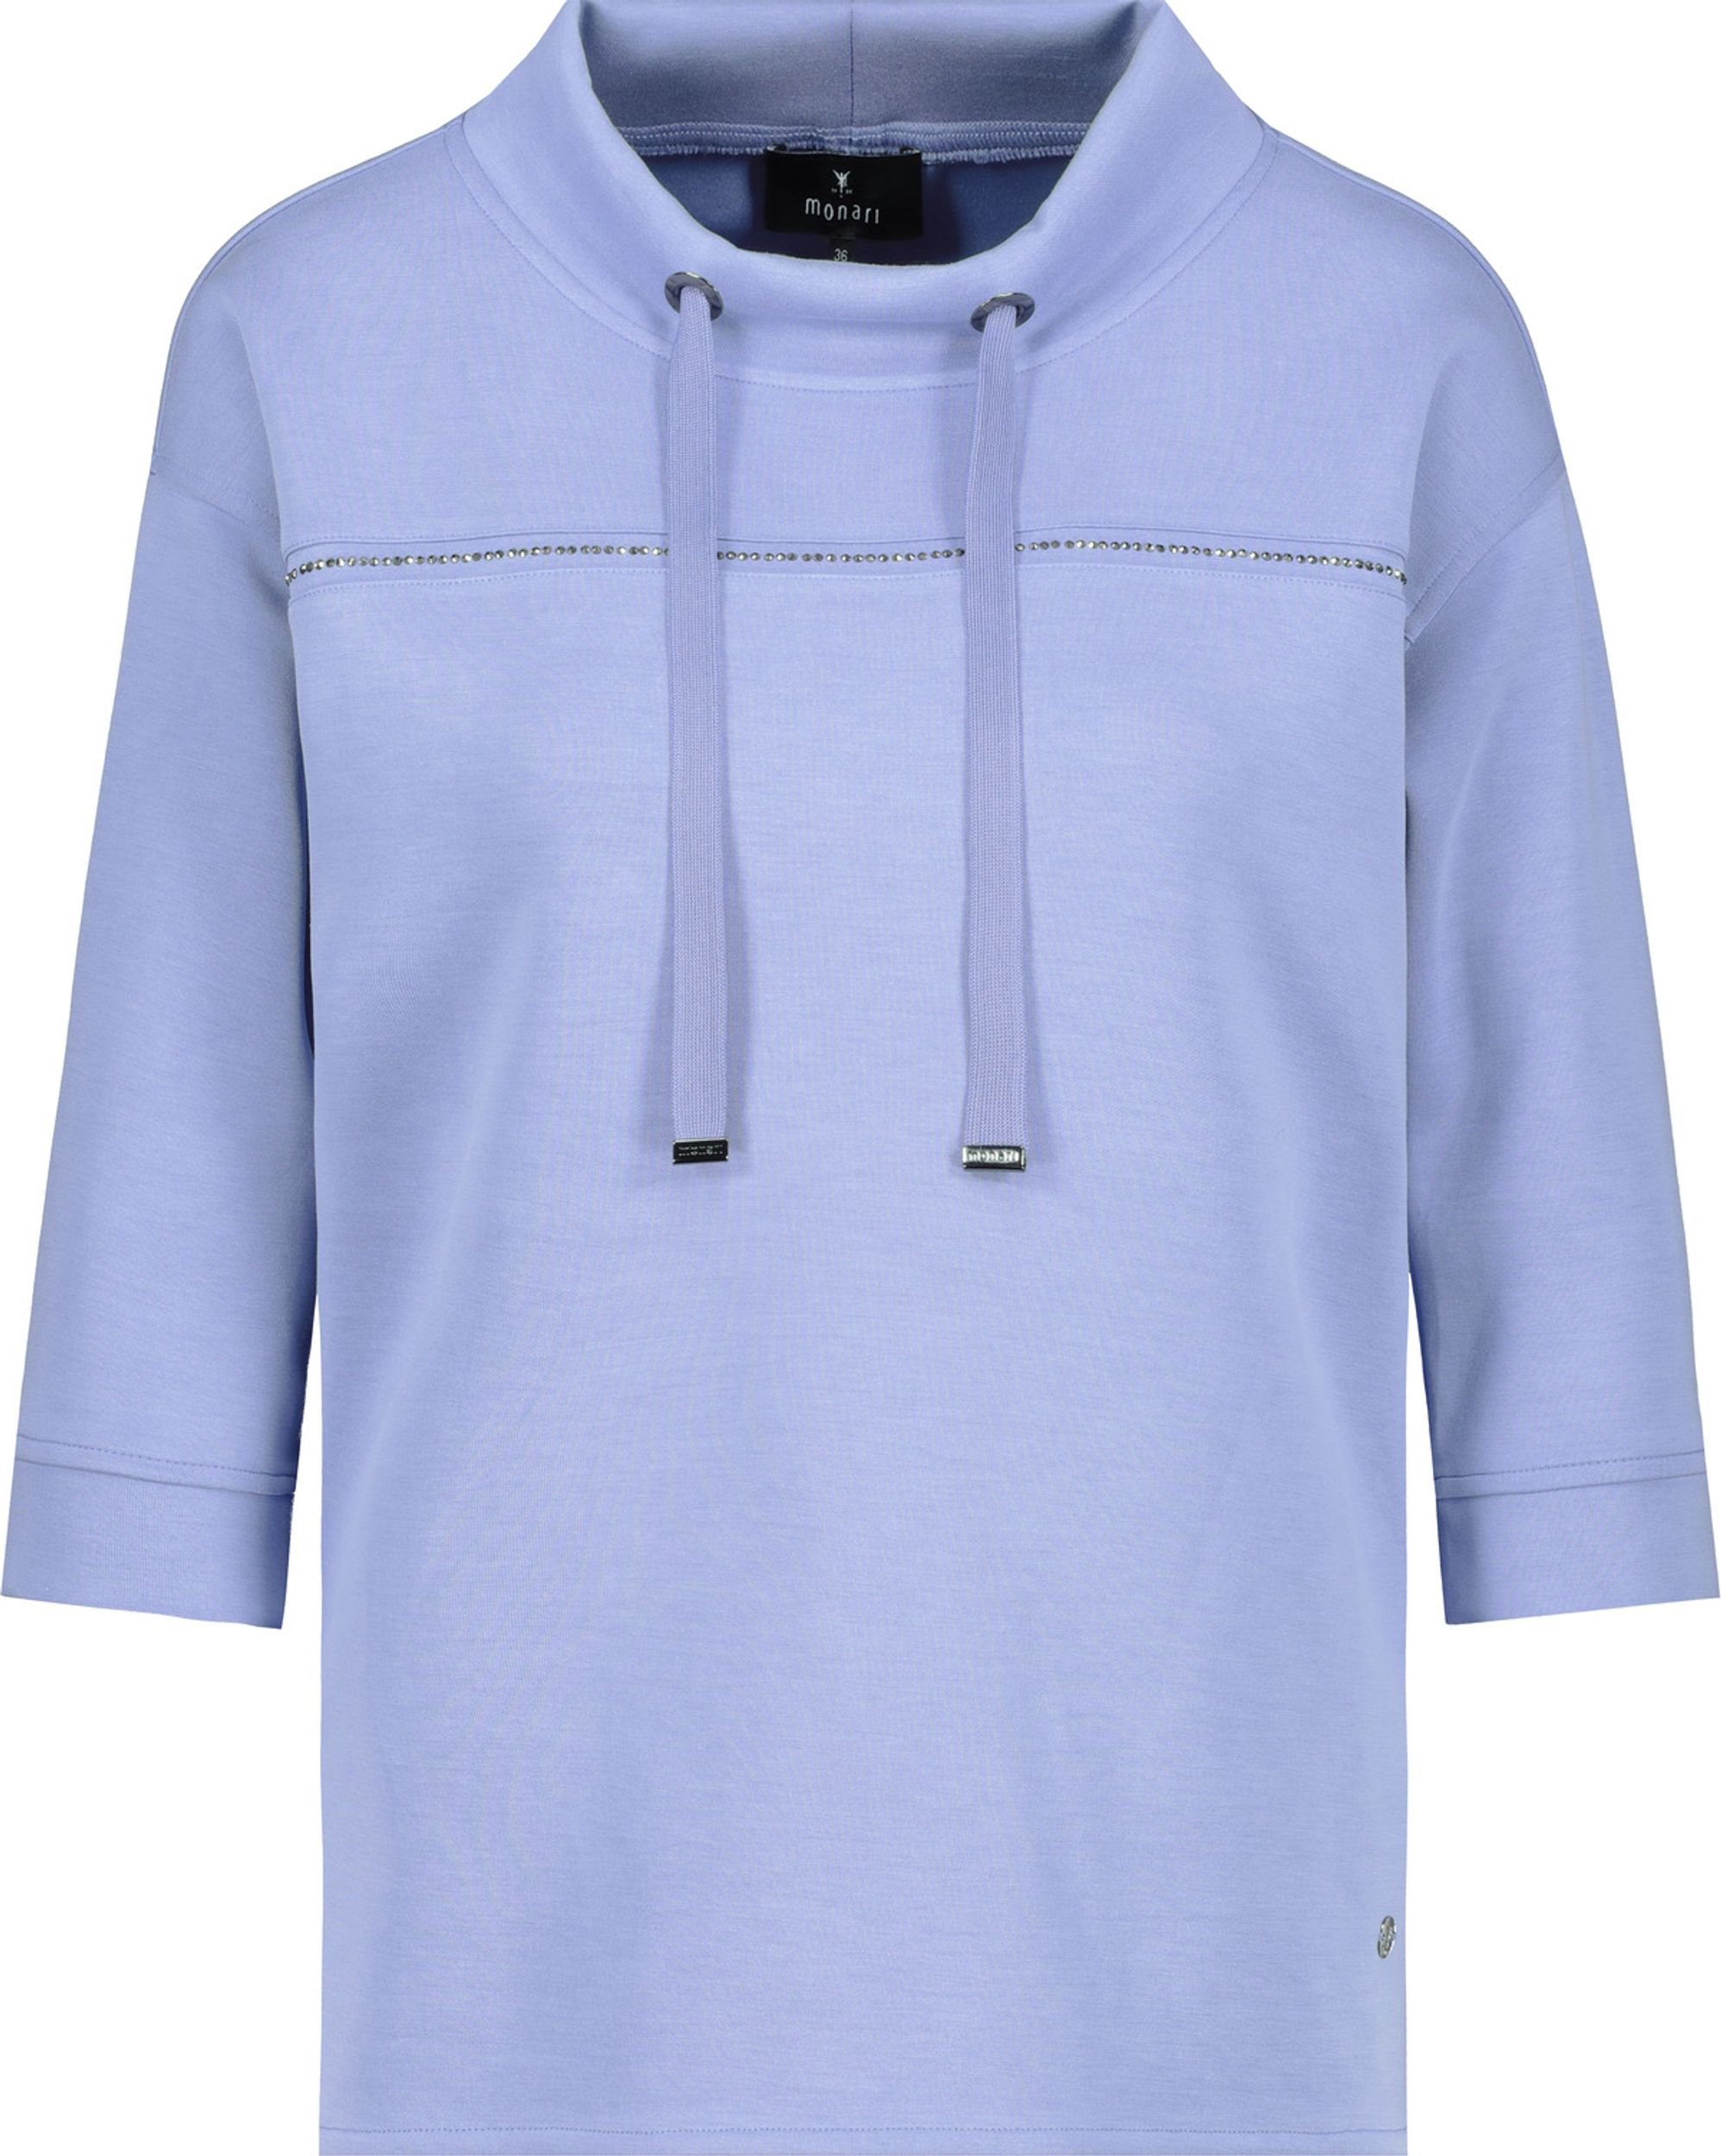 Sweatshirt, aqua blue